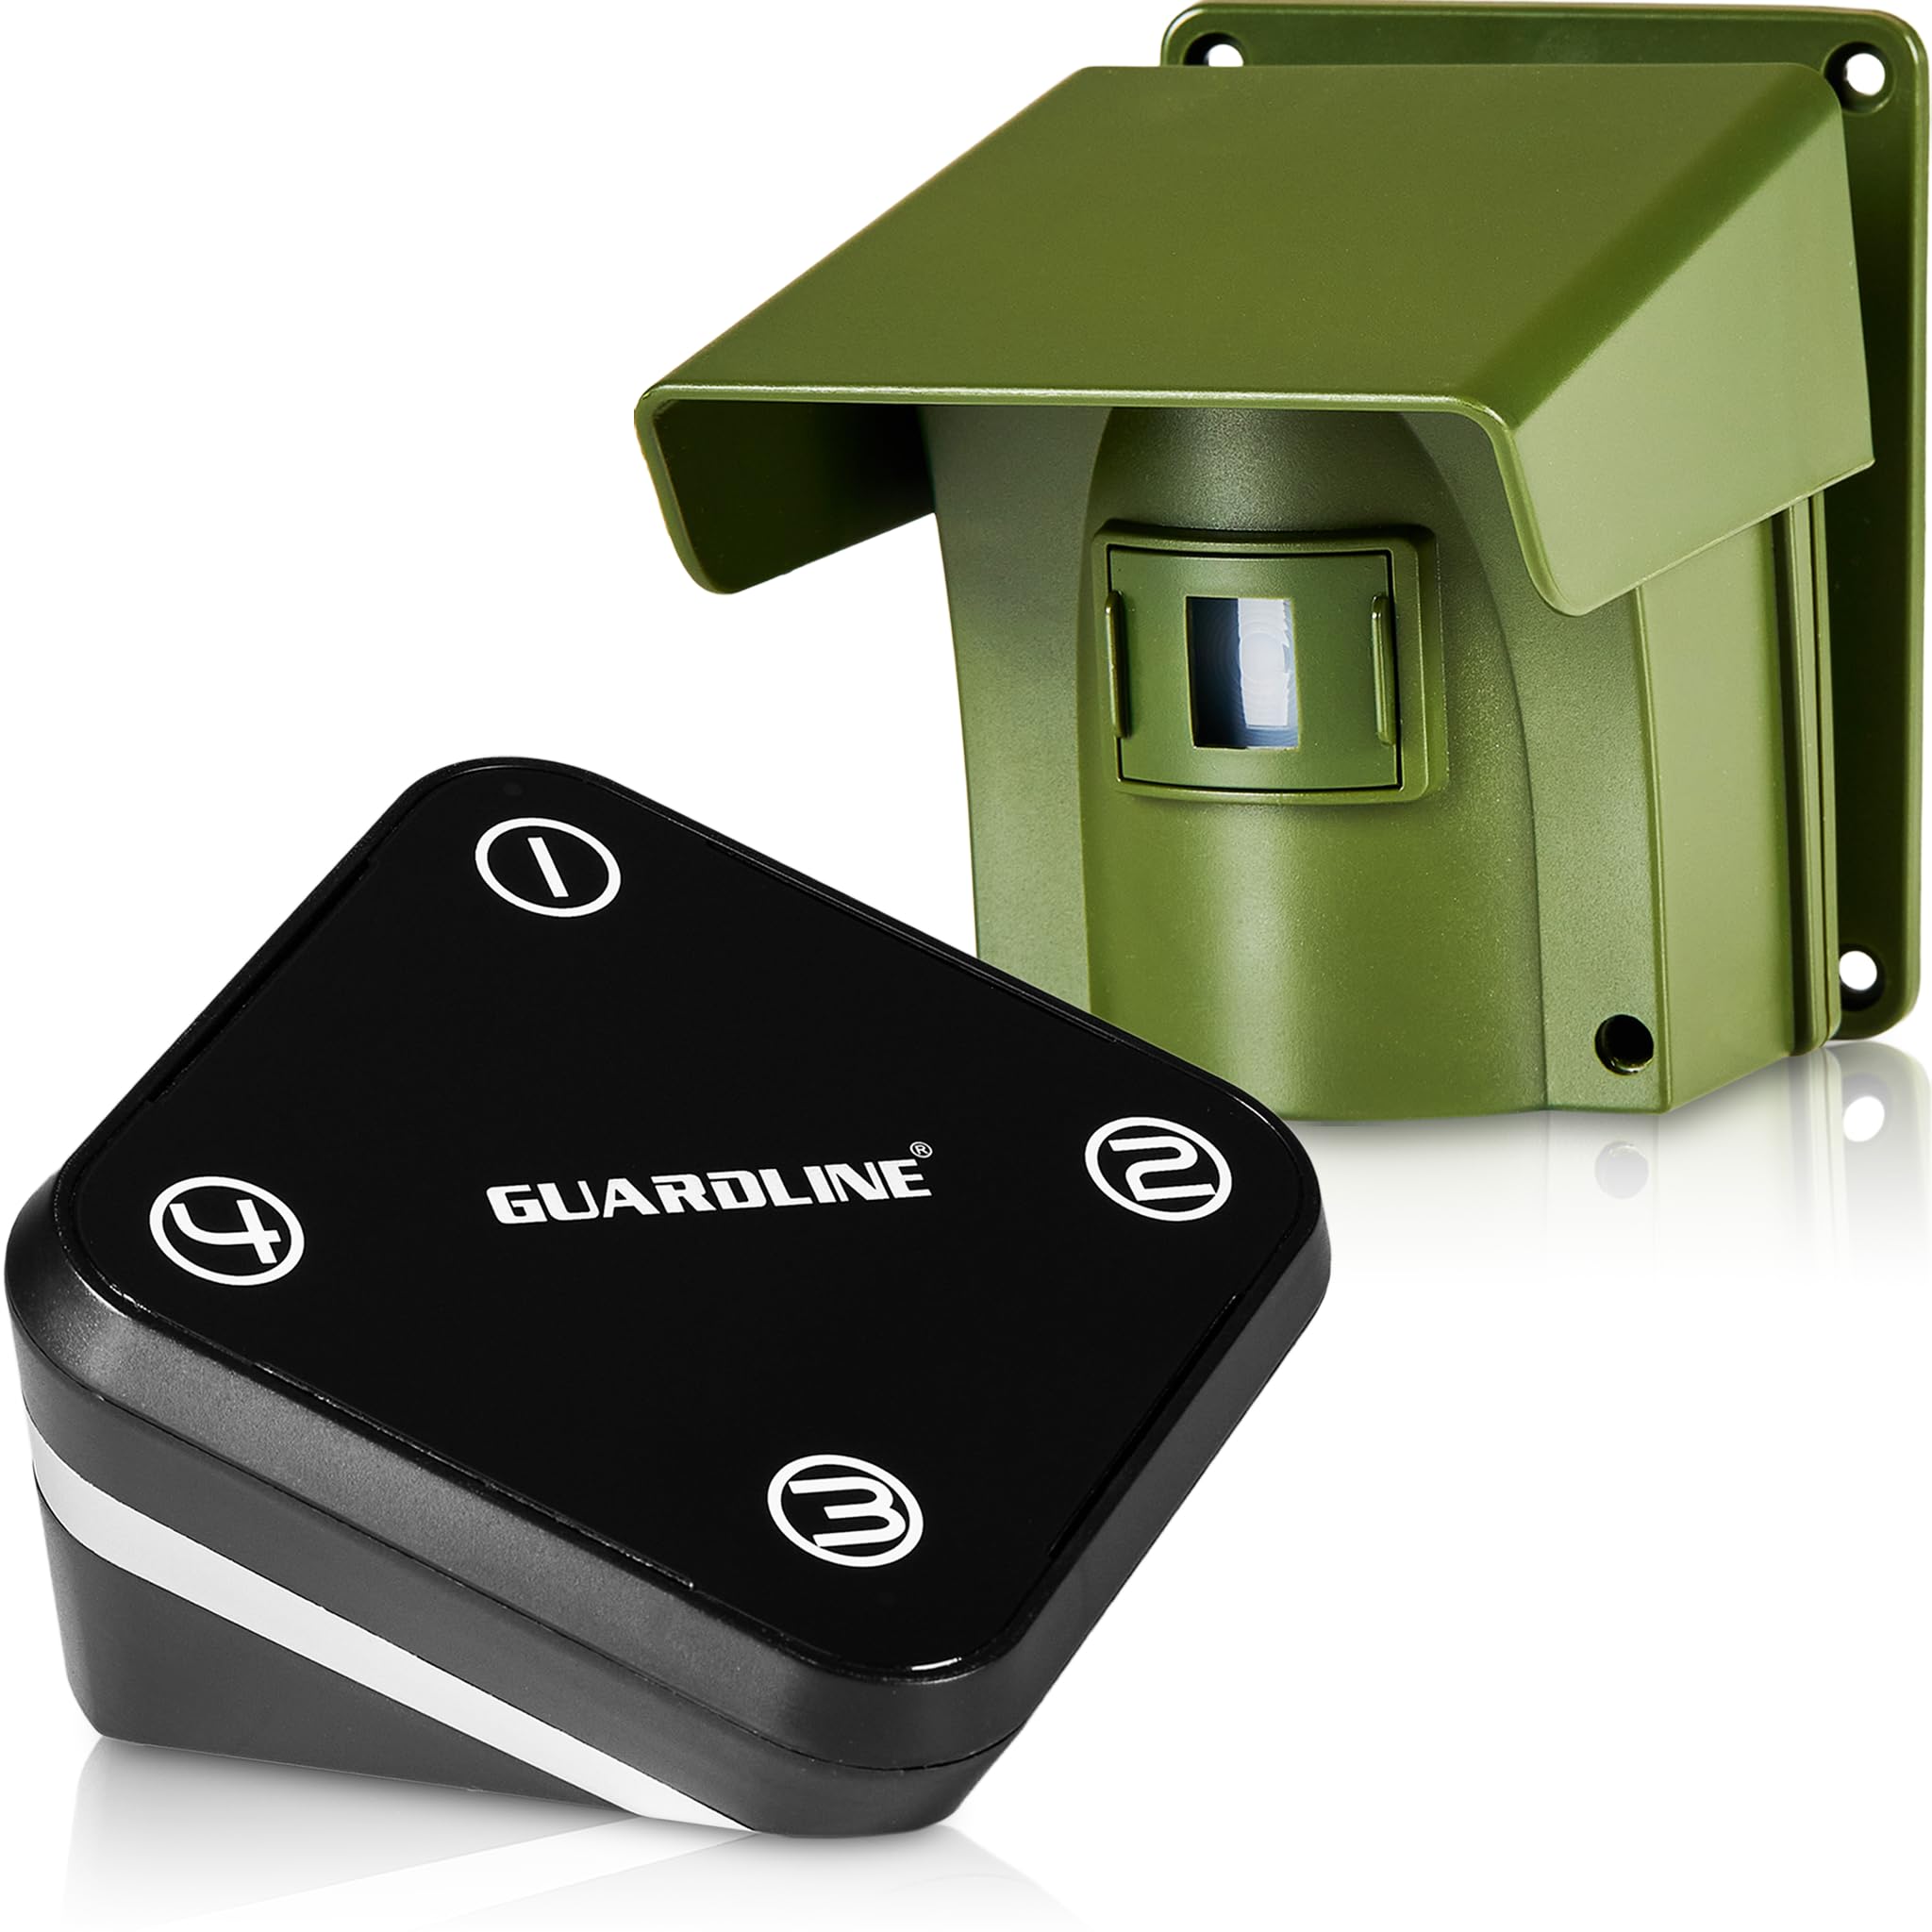 Guardline Wireless Driveway Alarm - 1/4 Mile Range, Weatherproof Outdoor Security Alert System for Home & Property